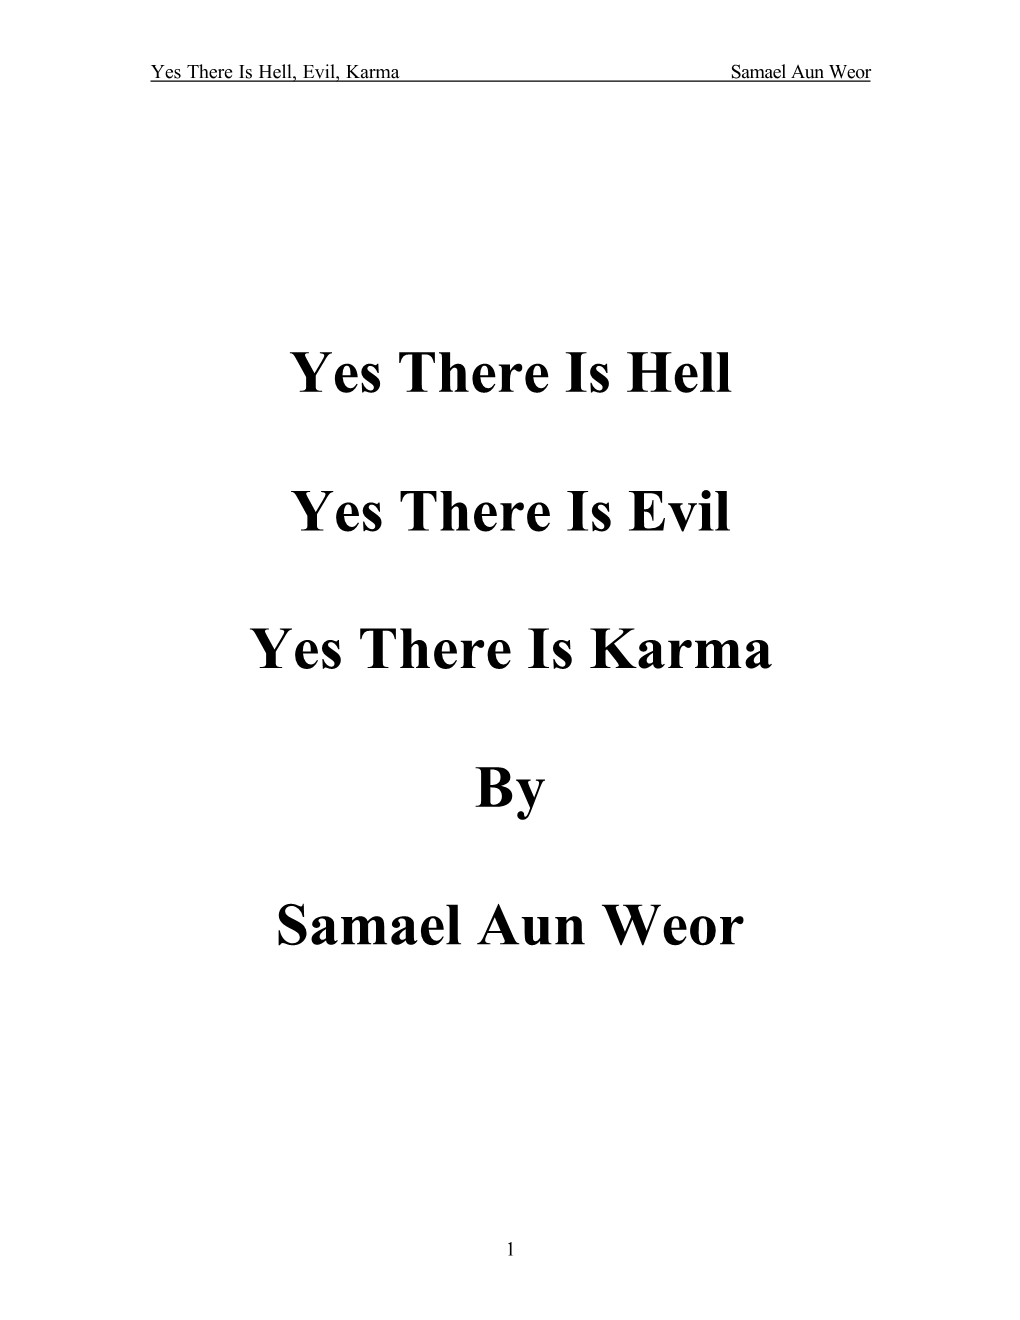 1973 Hell Devil Karma – Samael Aun Weor